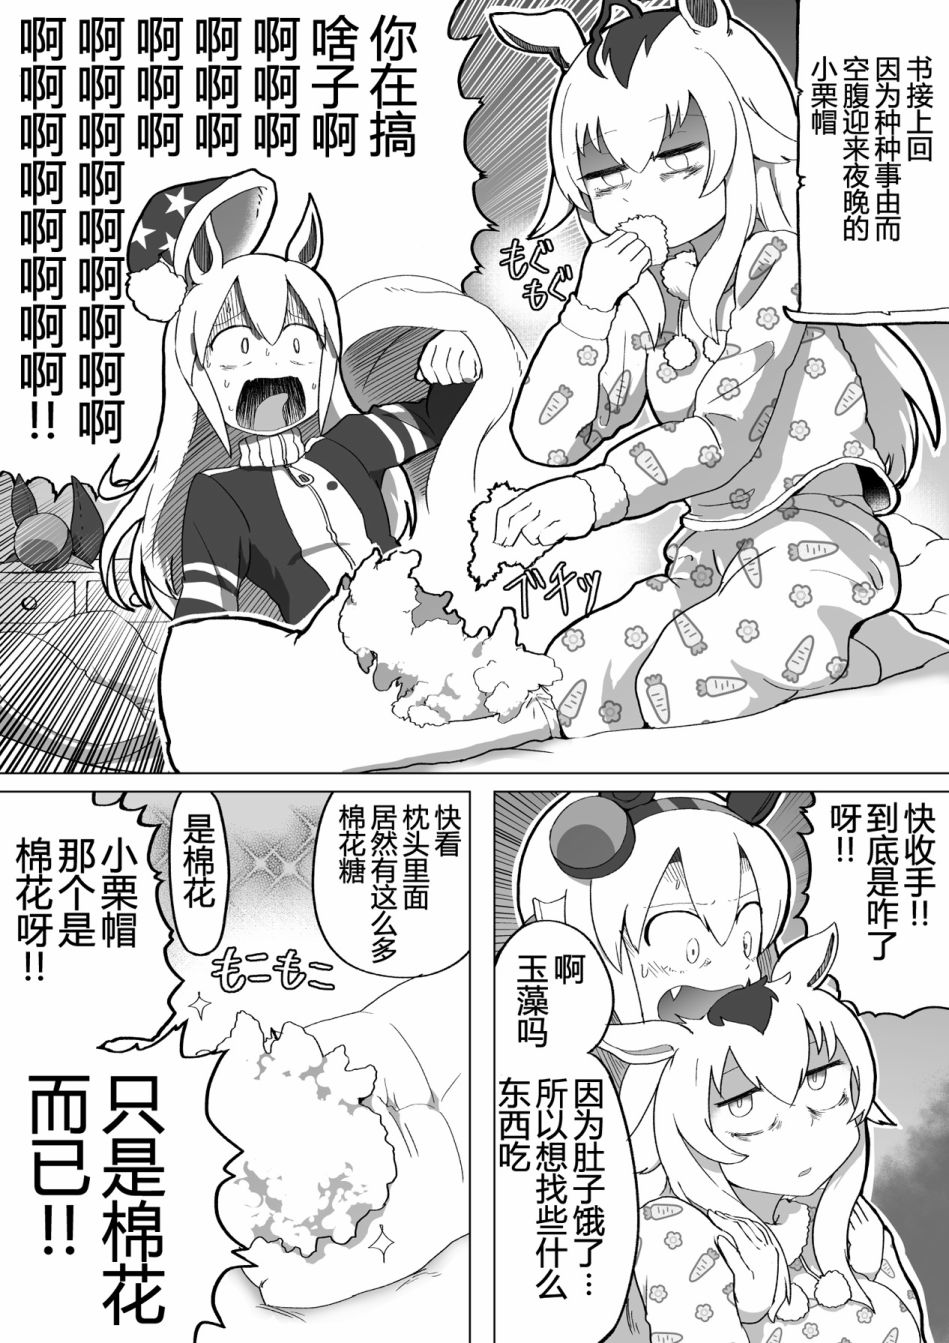 baka-man的赛马娘漫画 - 第01话 - 3